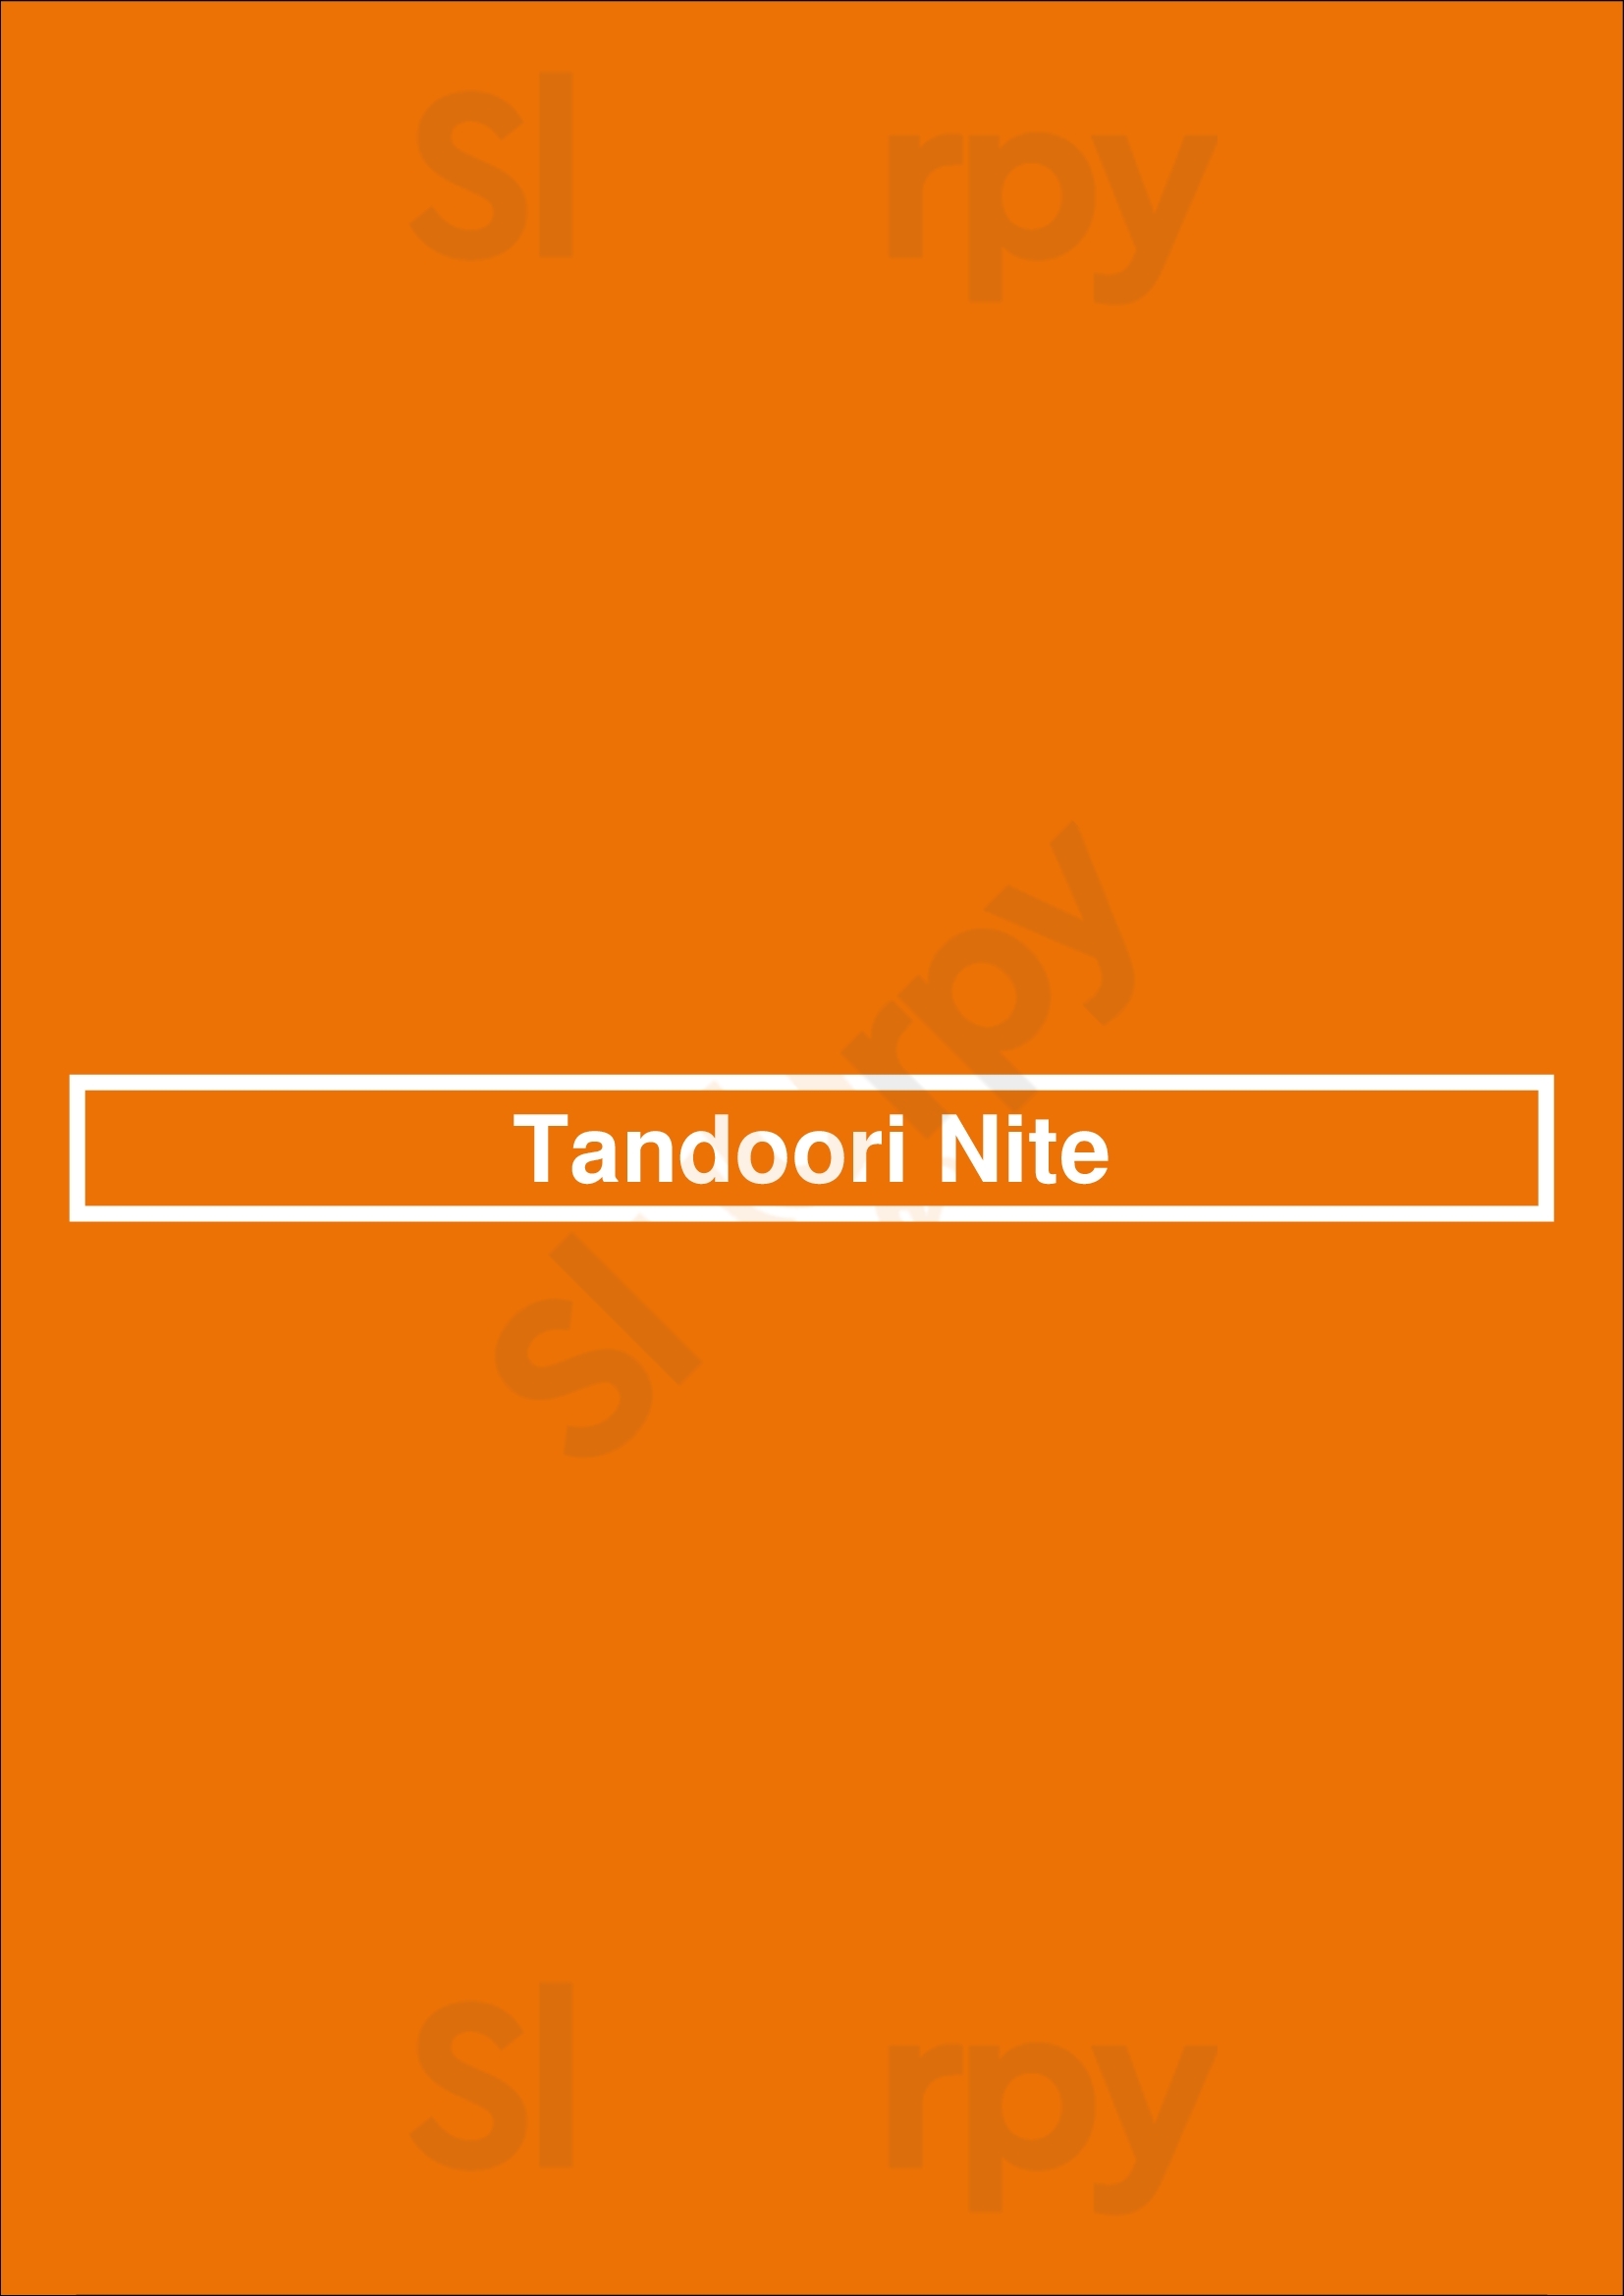 Tandoori Nite Houston Menu - 1